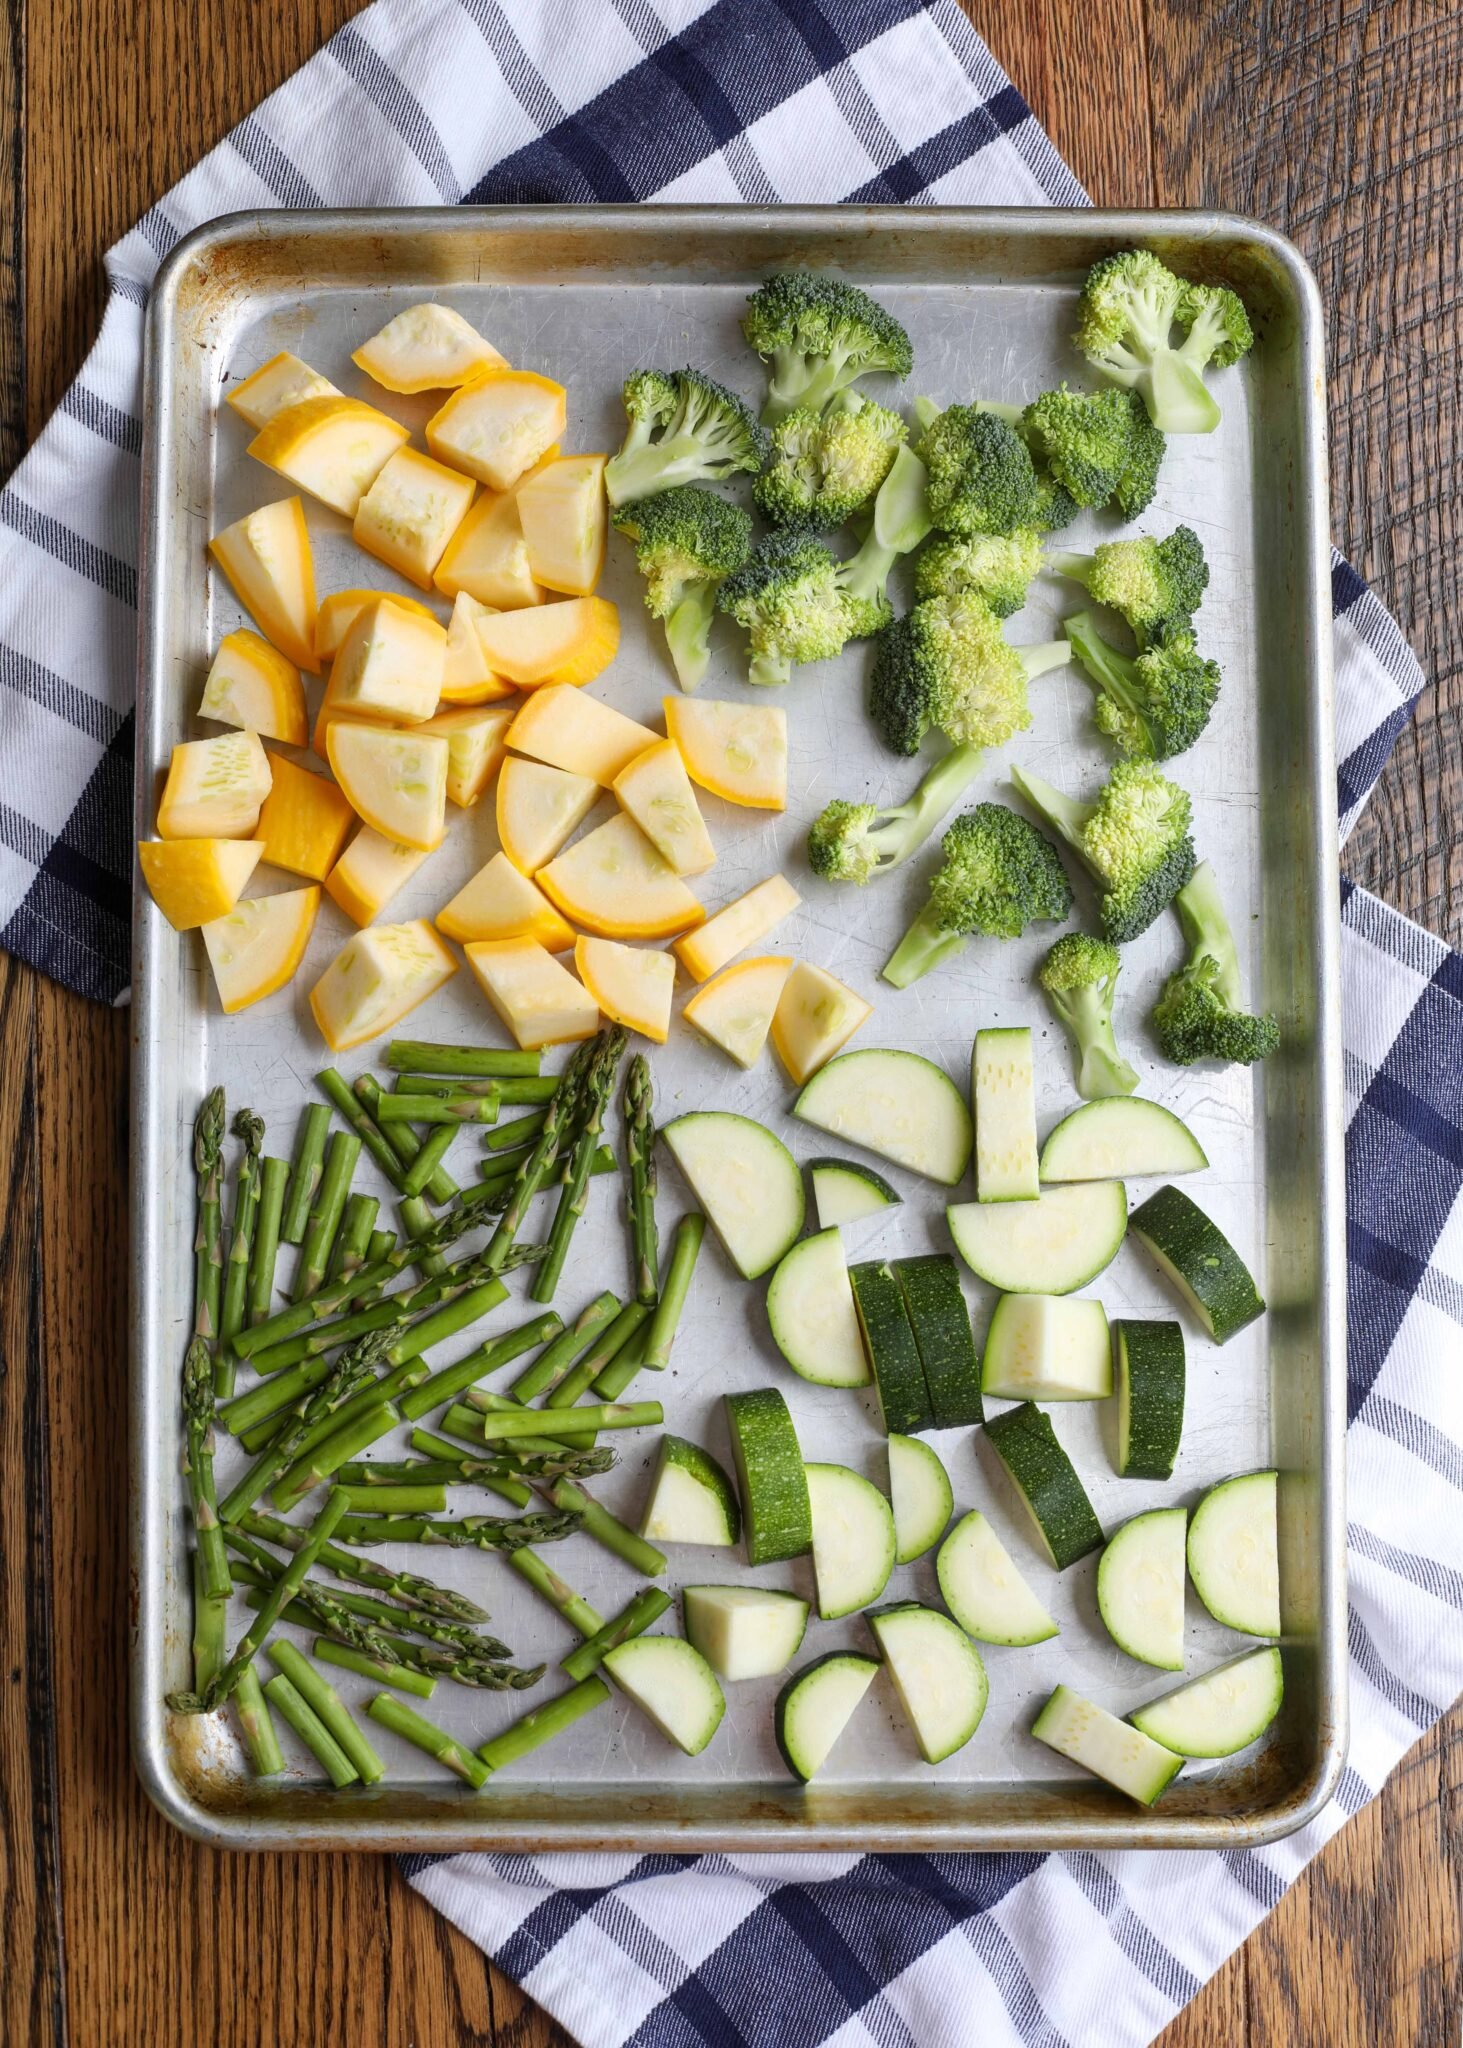 Squash, Asparagus, and Broccoli - ready for roasting